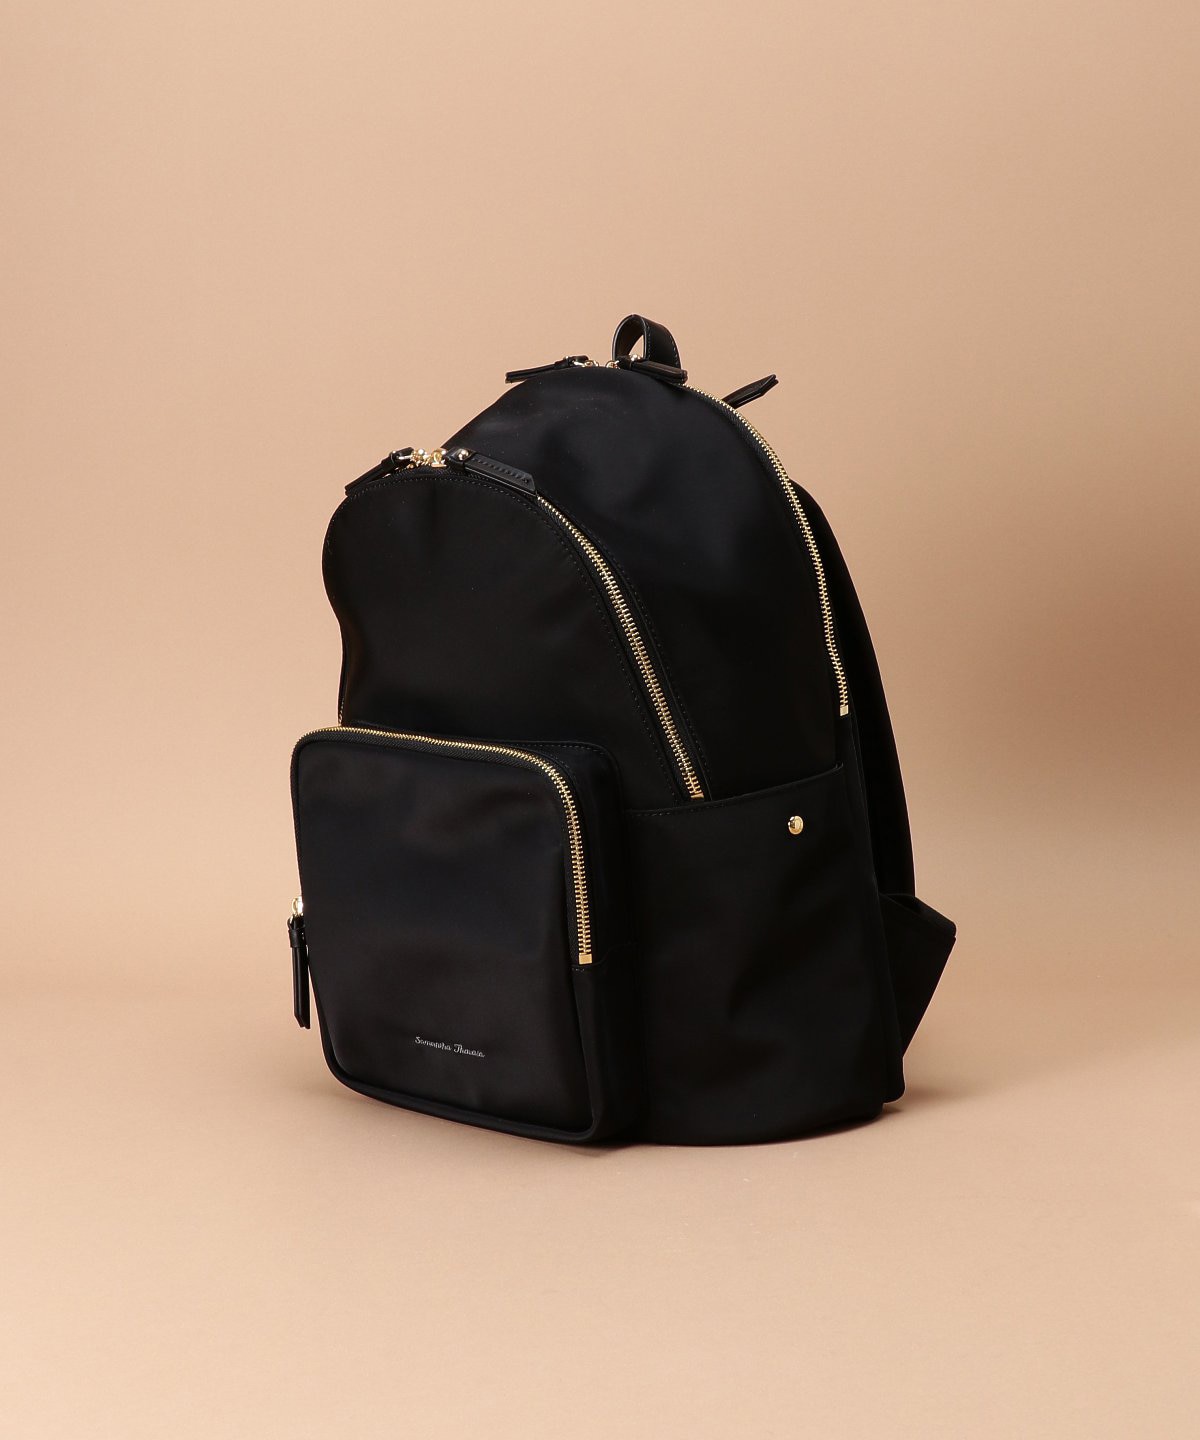 ☆Dream bag for ナイロンリュック Ⅱ(FREE ブラック): Samantha